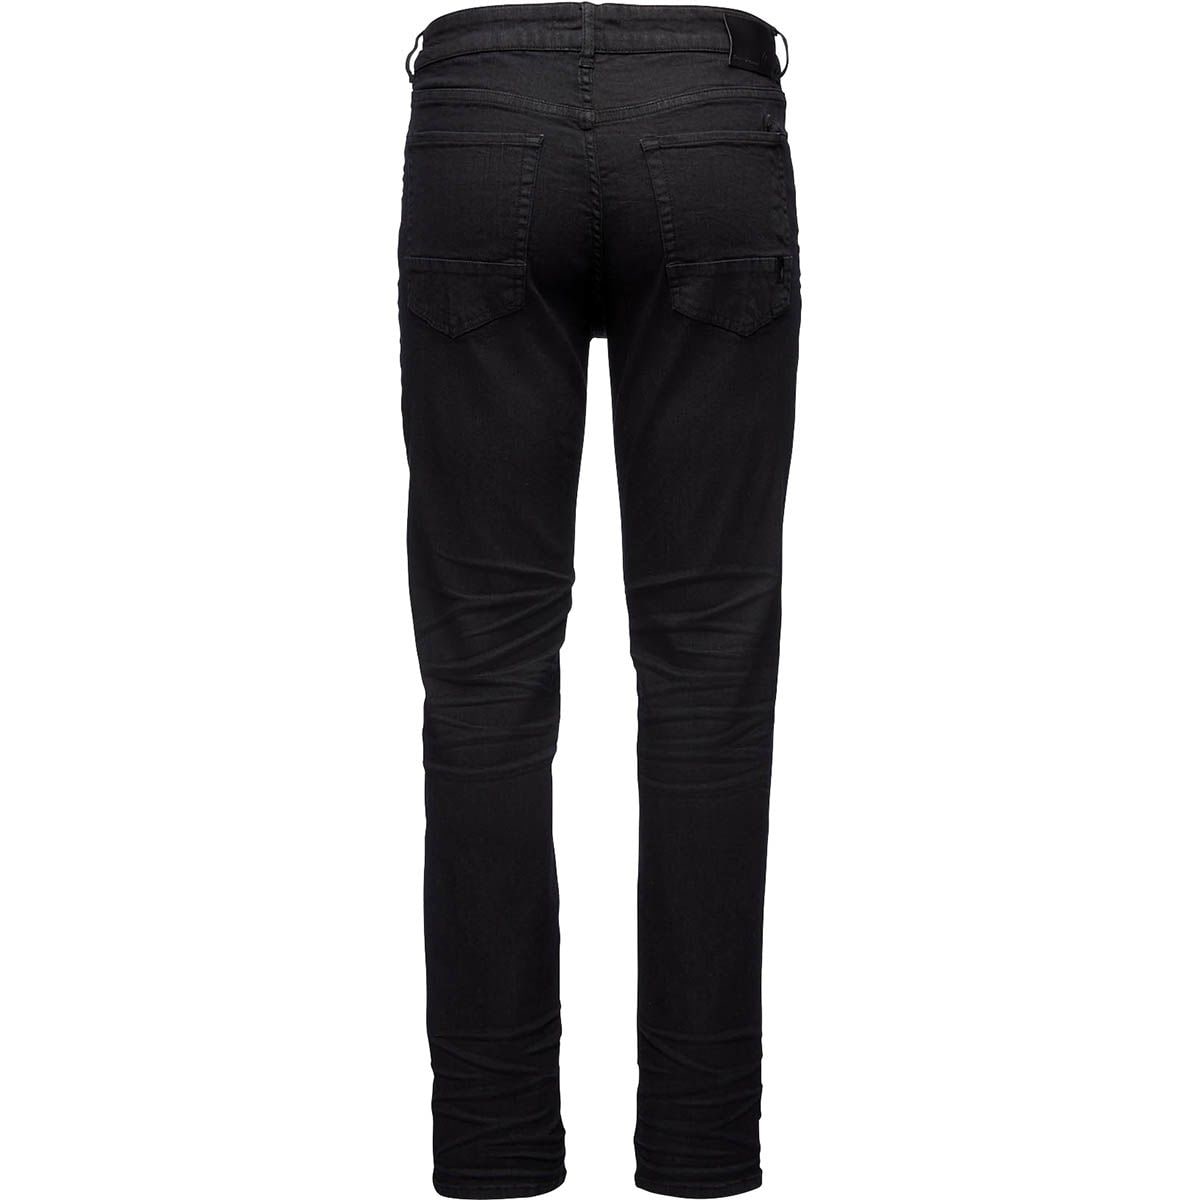 Gap Black Super Skinny Fit Jeans (4-16yrs)